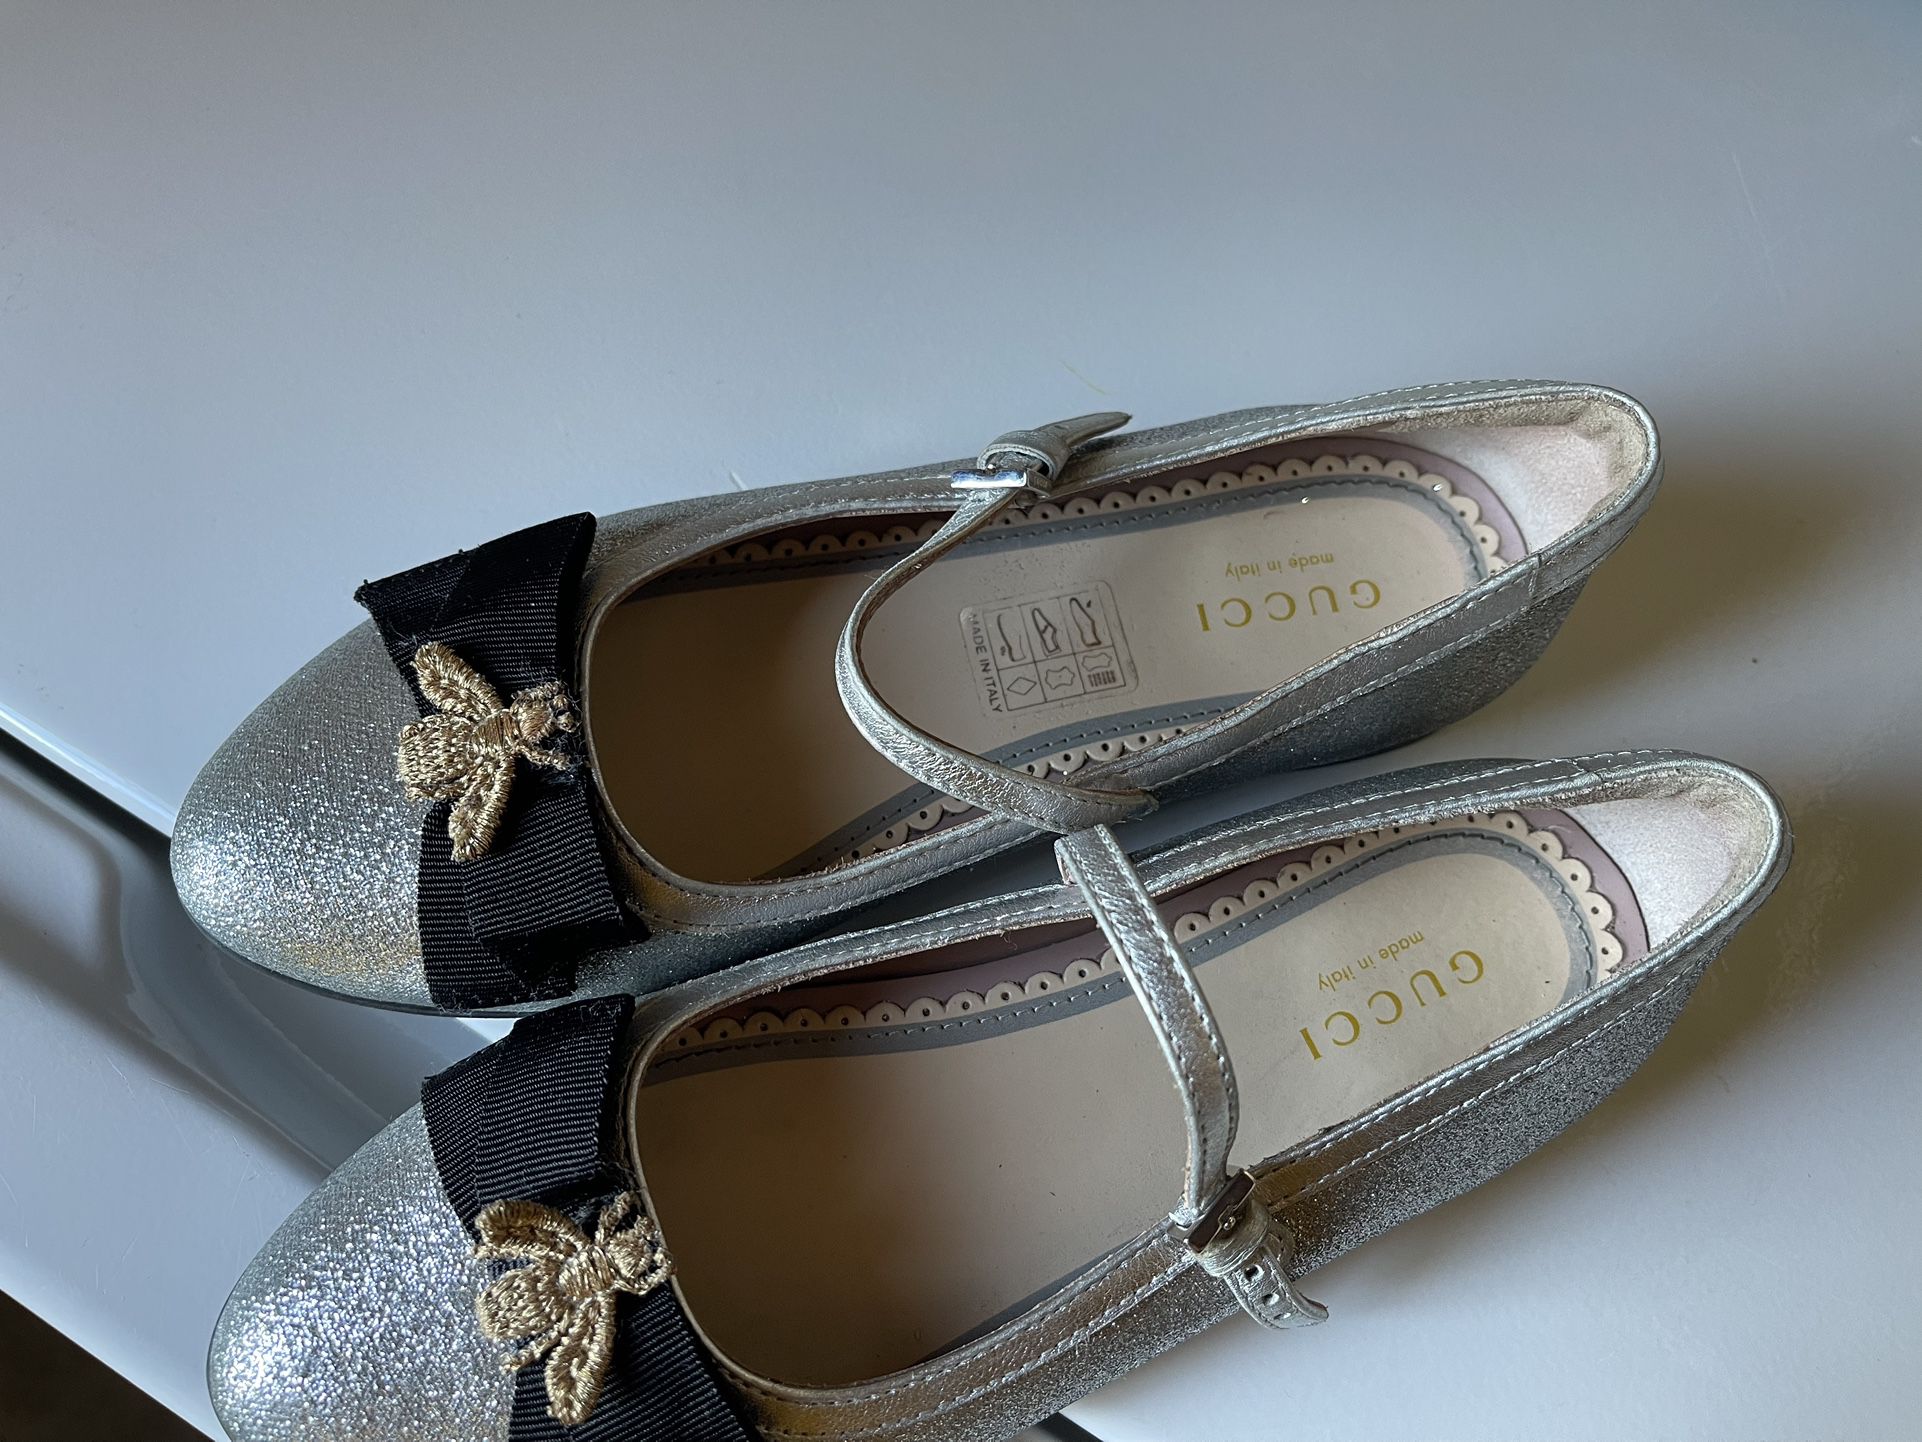 Gucci heels for little girls. 